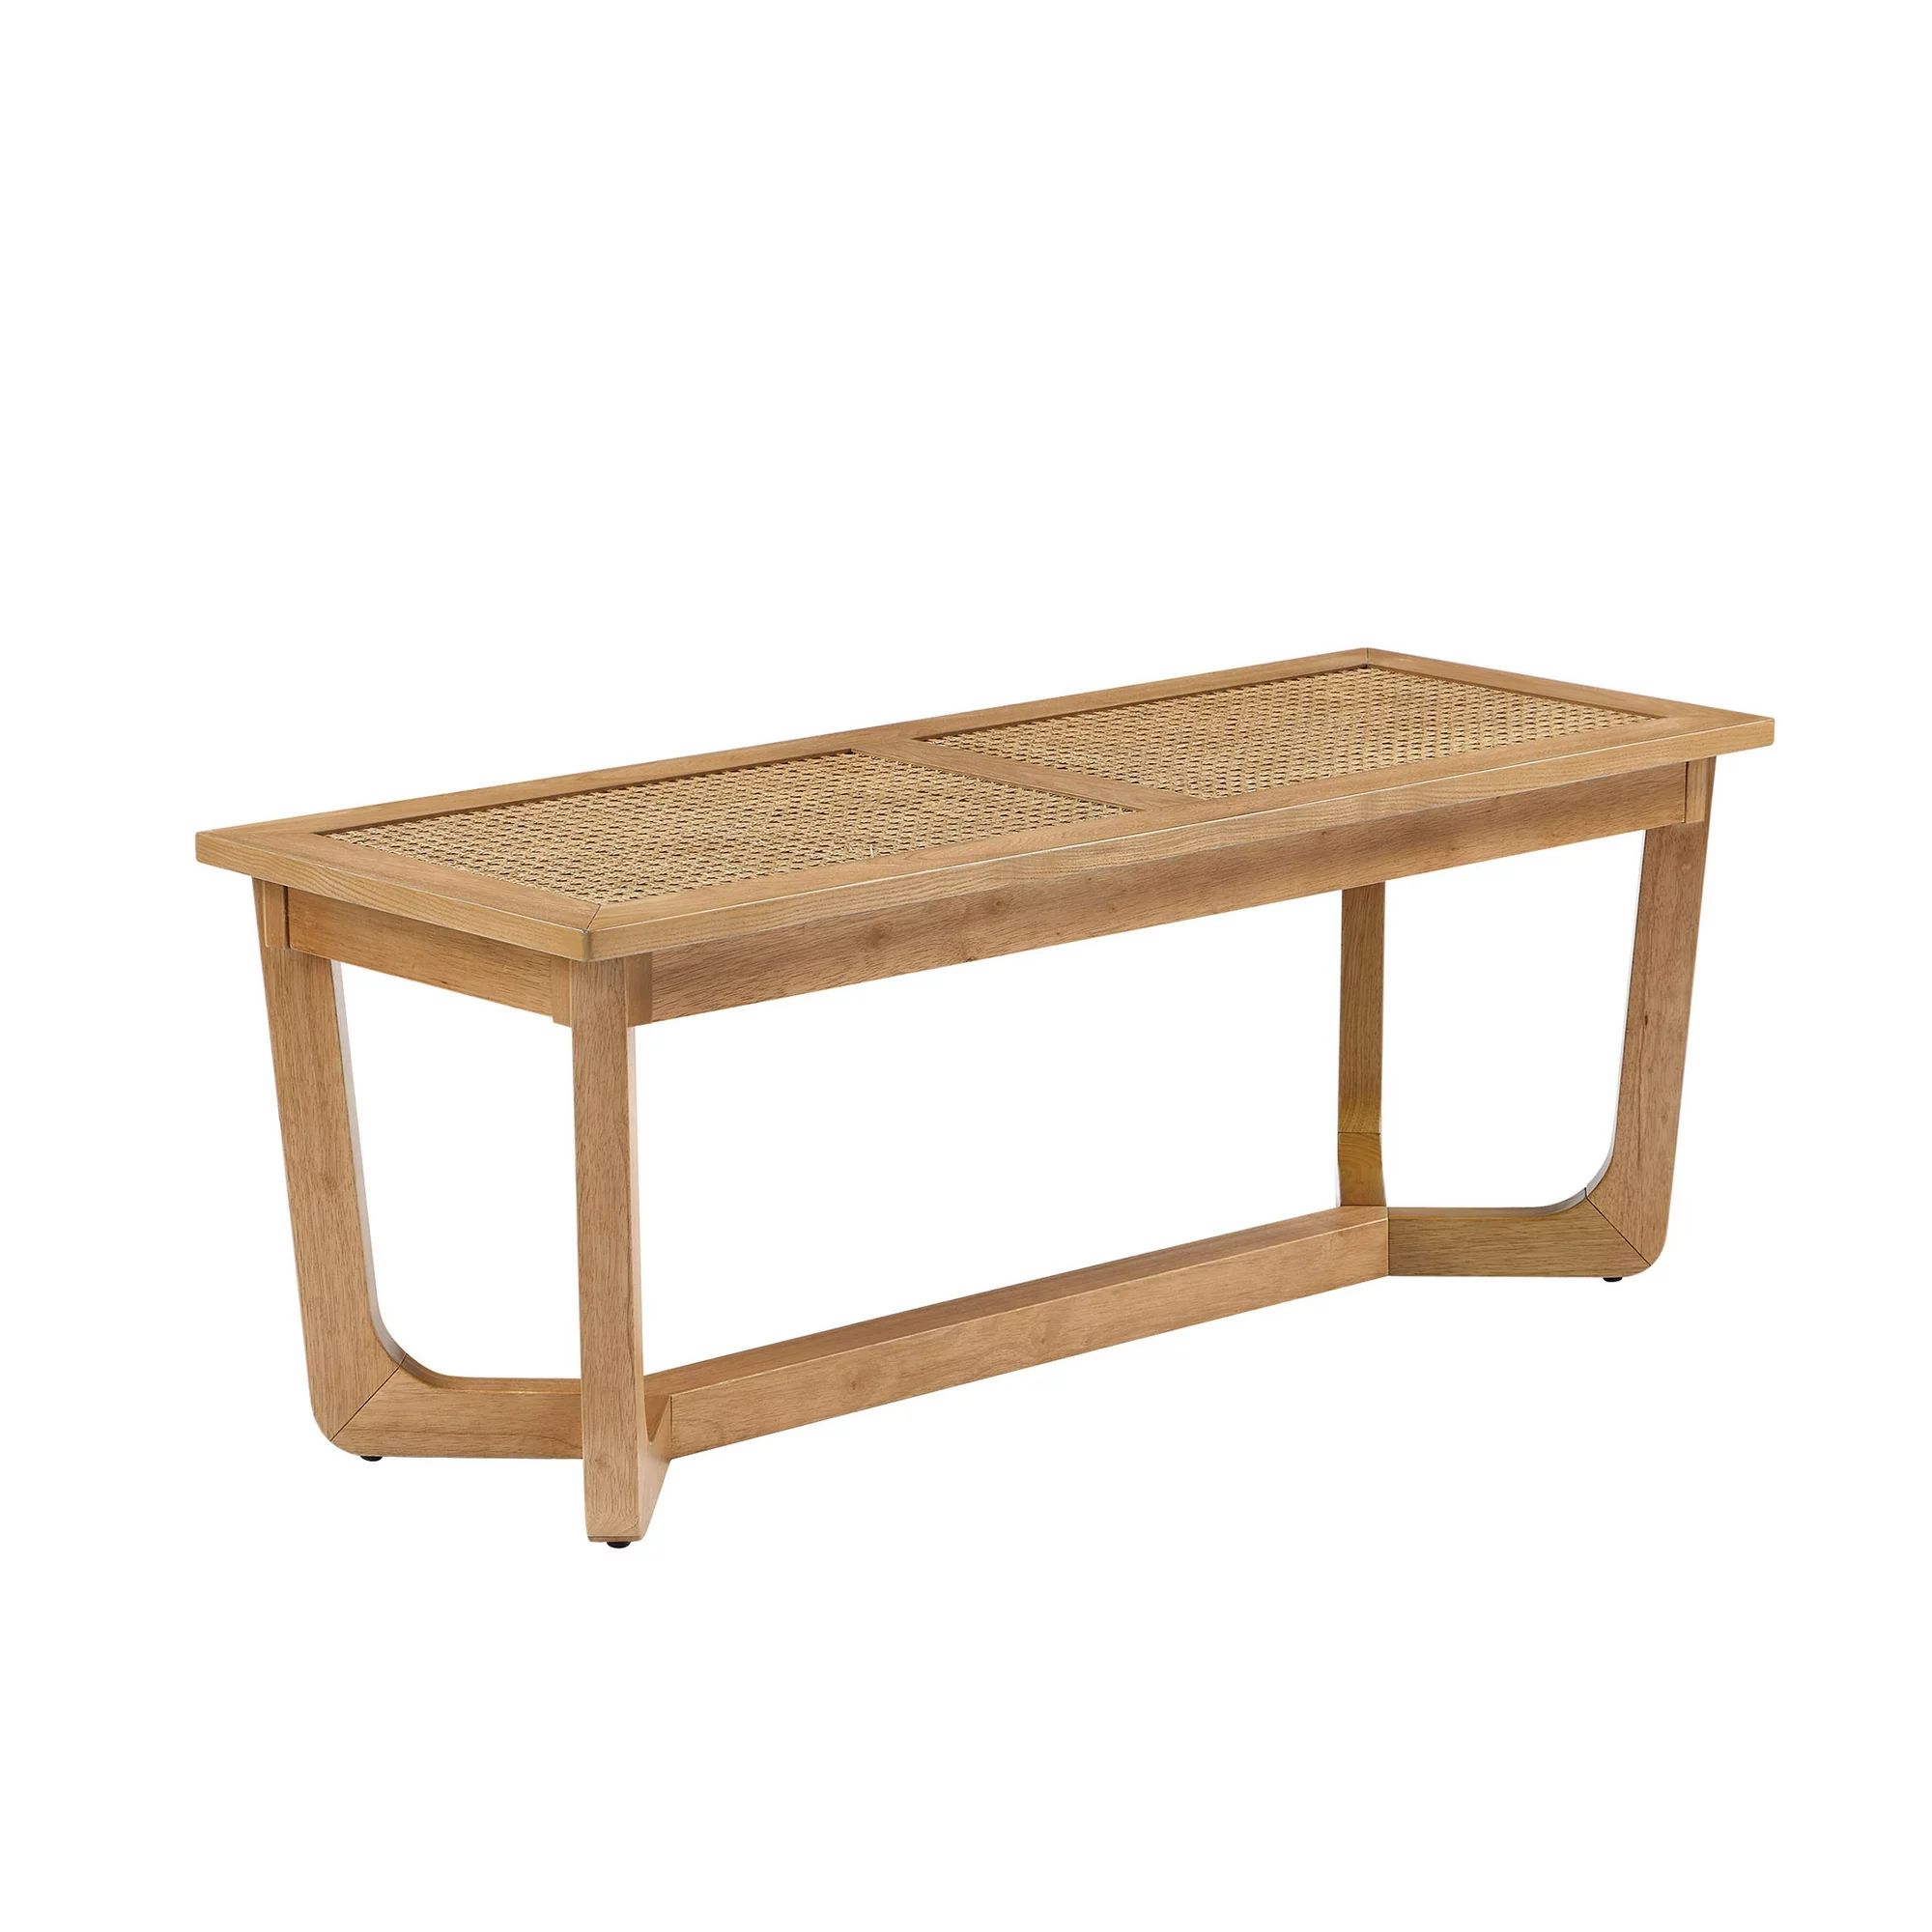 Beautiful Rattan & Wood Bench with Solid Wood Frame by Drew Barrymore,  Warm Honey Finish - Walma... | Walmart (US)